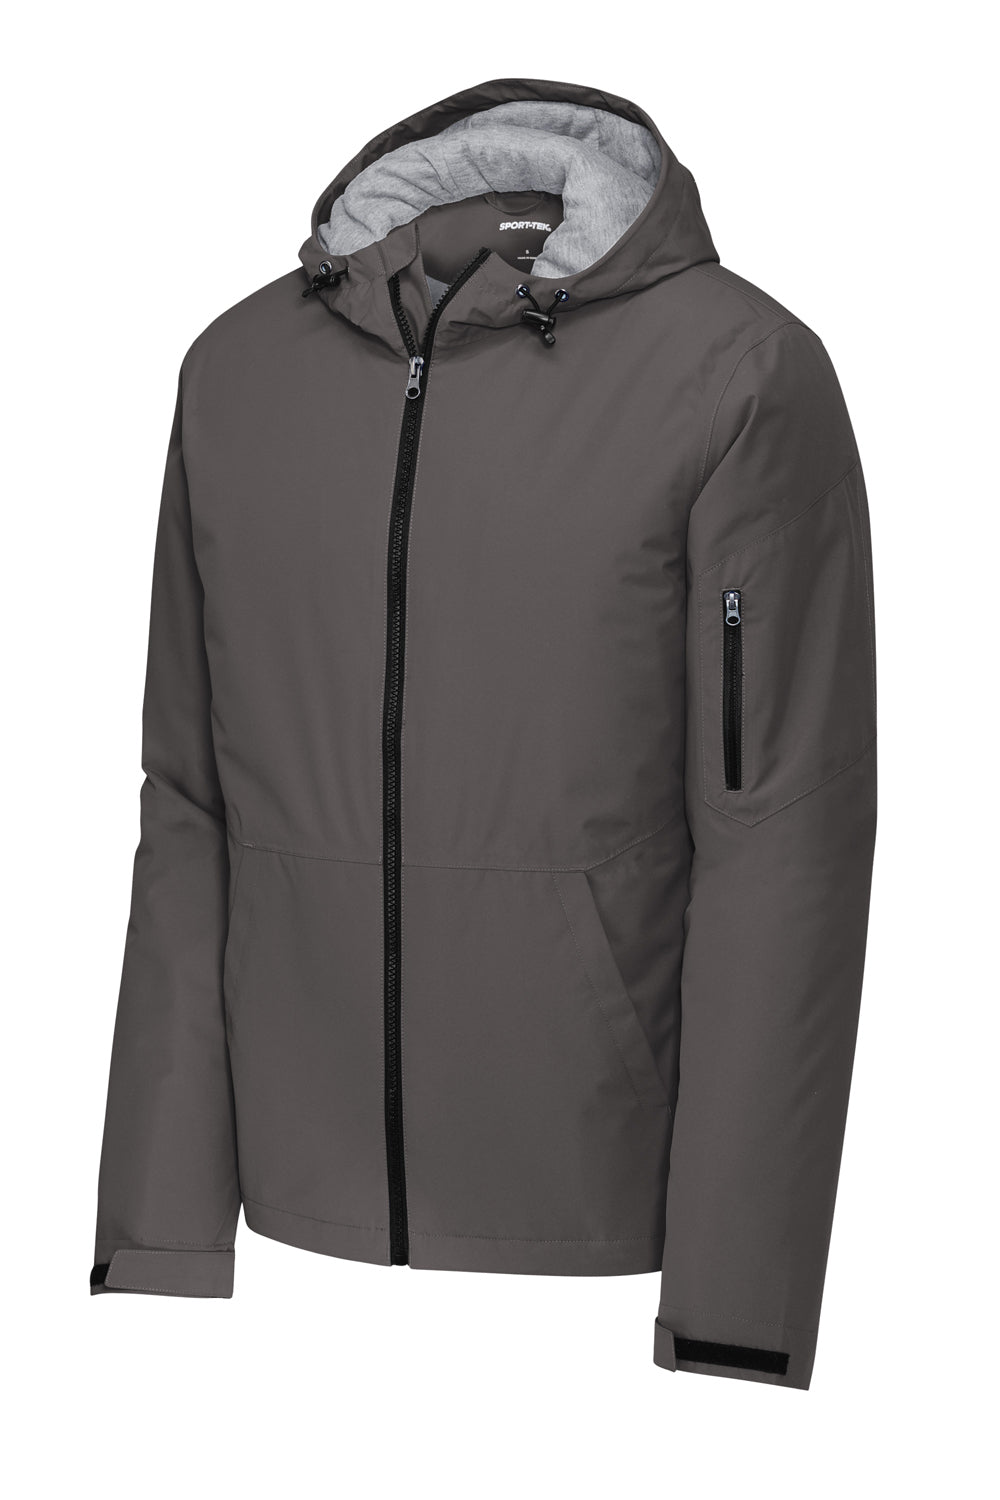 Sport-Tek JST56 Waterproof Insulated Full Zip Hooded Jacket Graphite Grey Flat Front